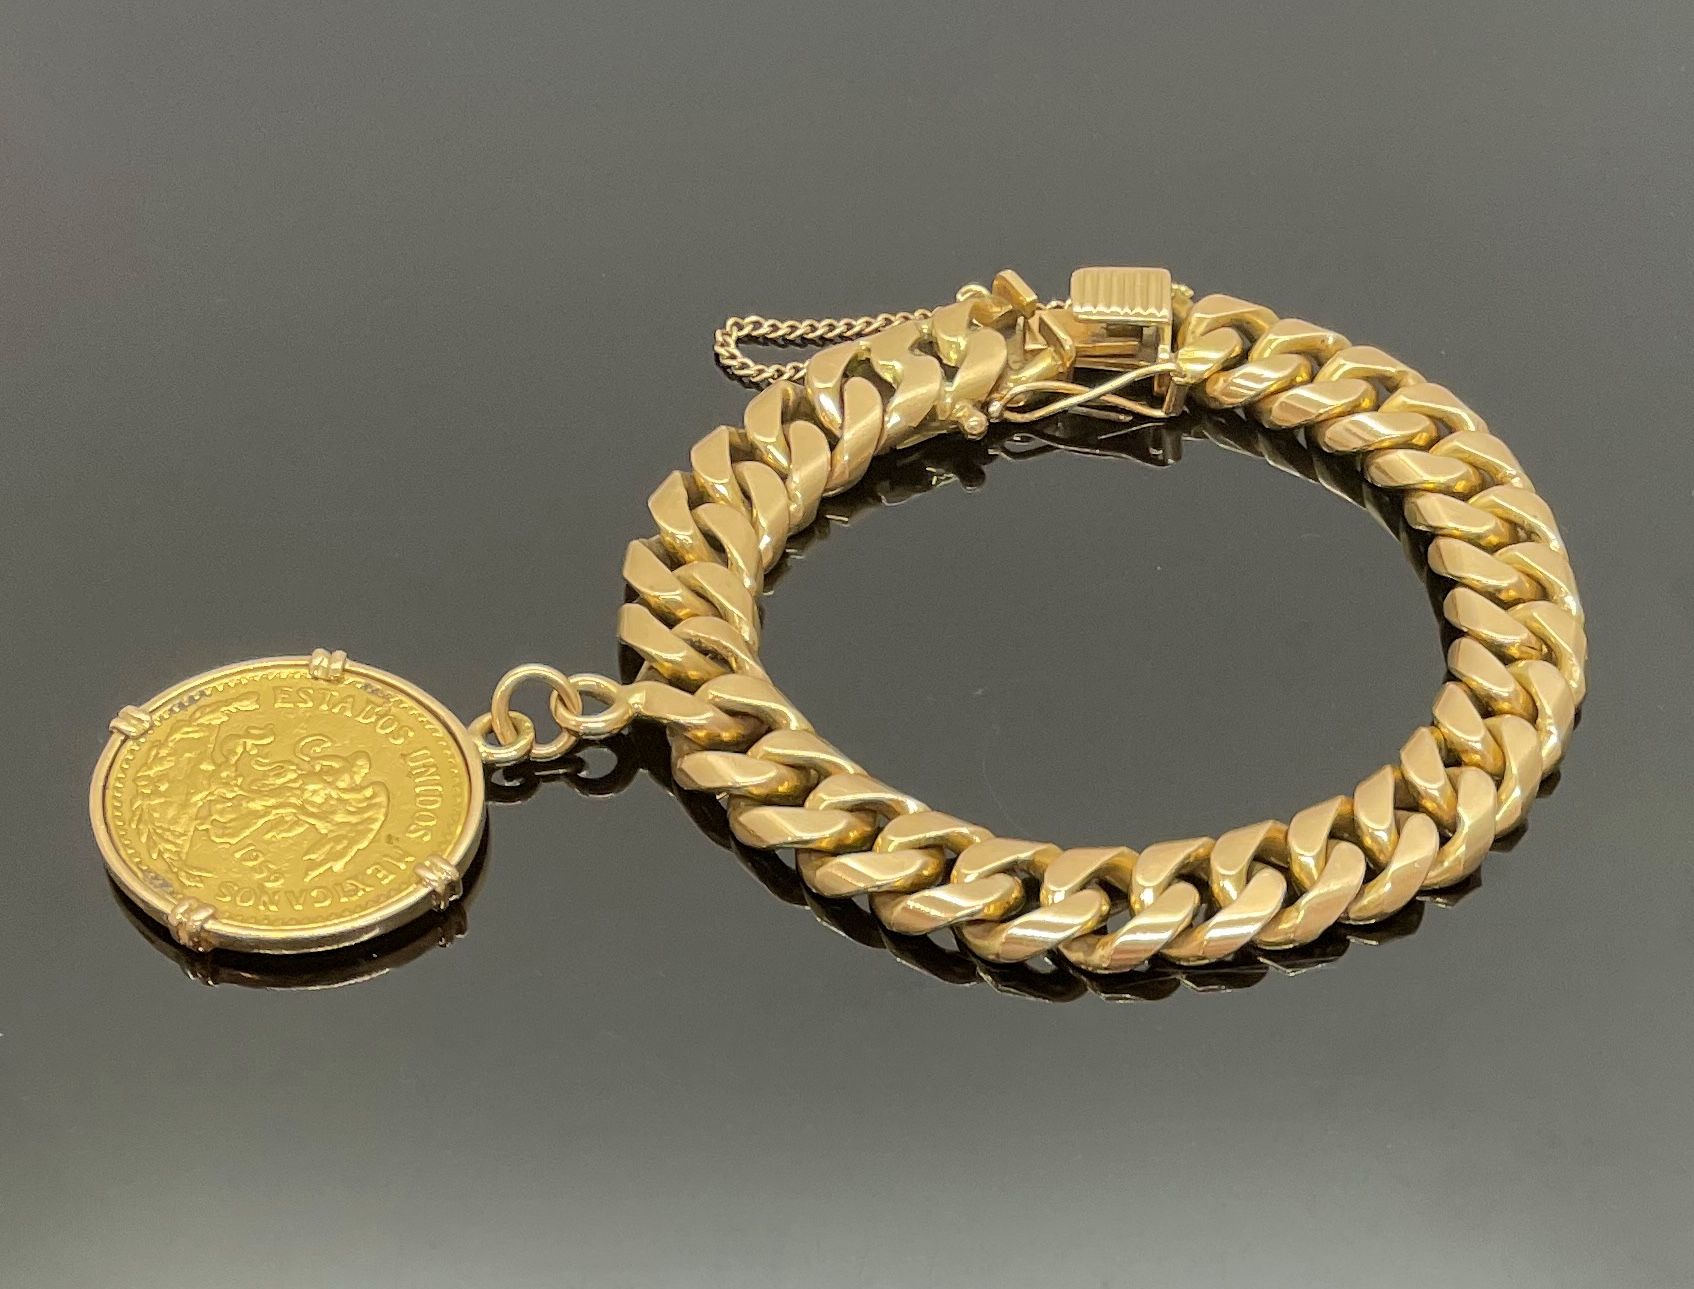 Null 黄金手镯，750密耳，持有一枚20墨西哥比索的金币，1959年。安全链。重量103克